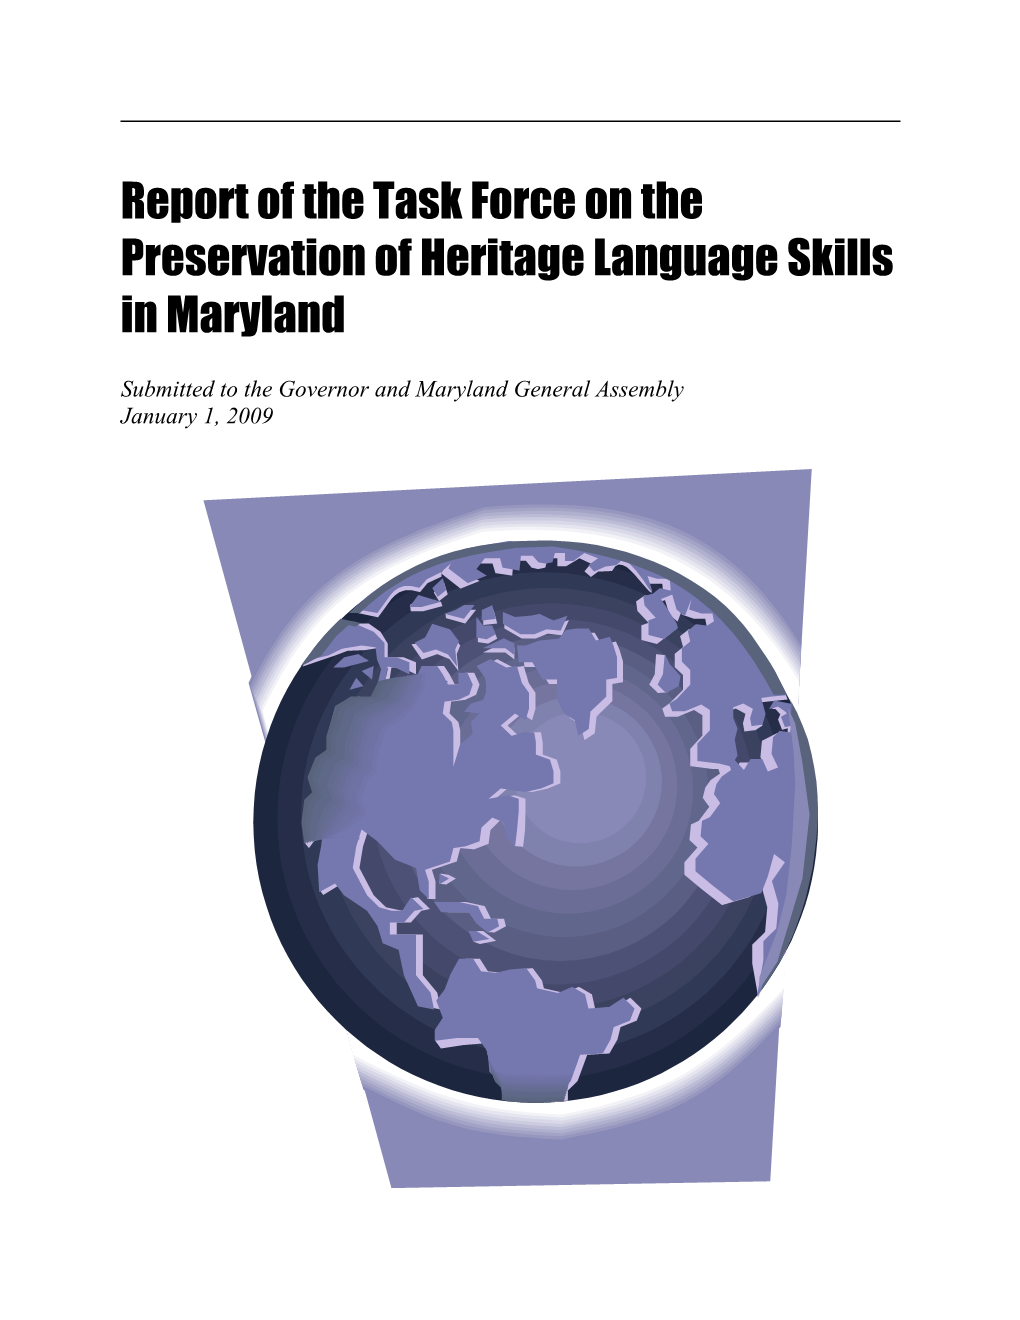 Heritage Language Task Force Report